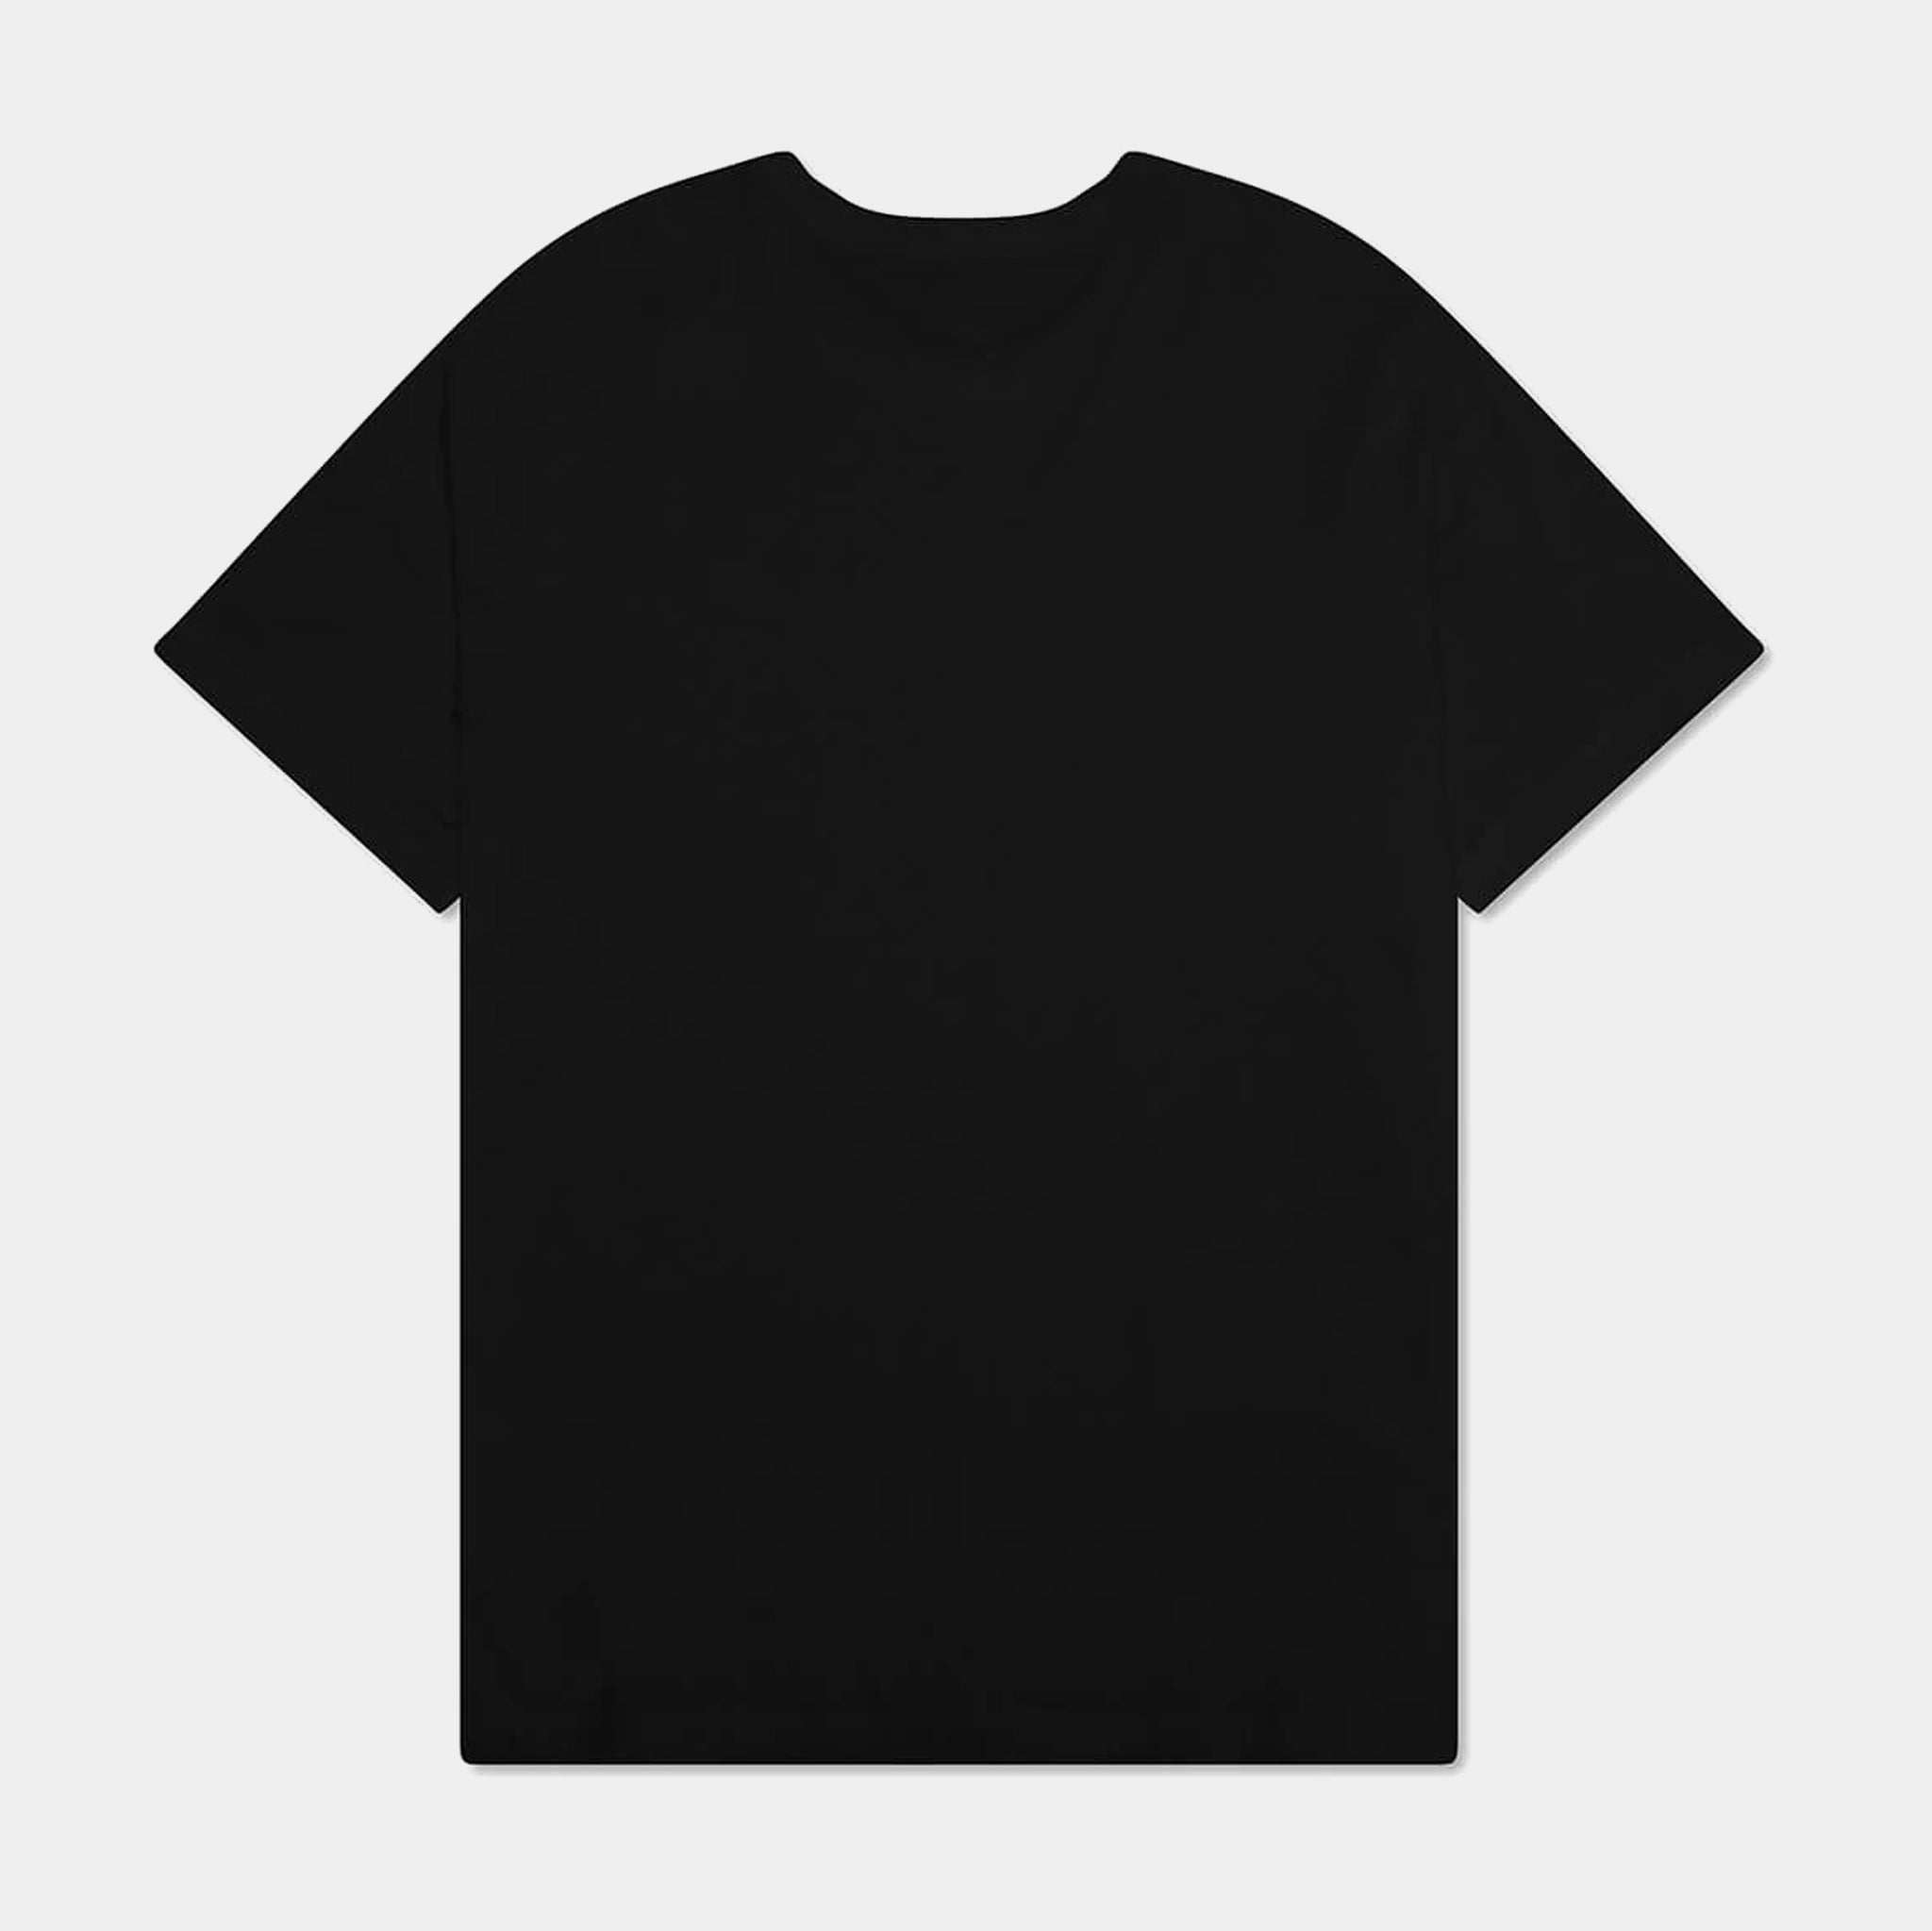 Nike Sportswear T-Shirt Just Do it Black – Brands Democracy